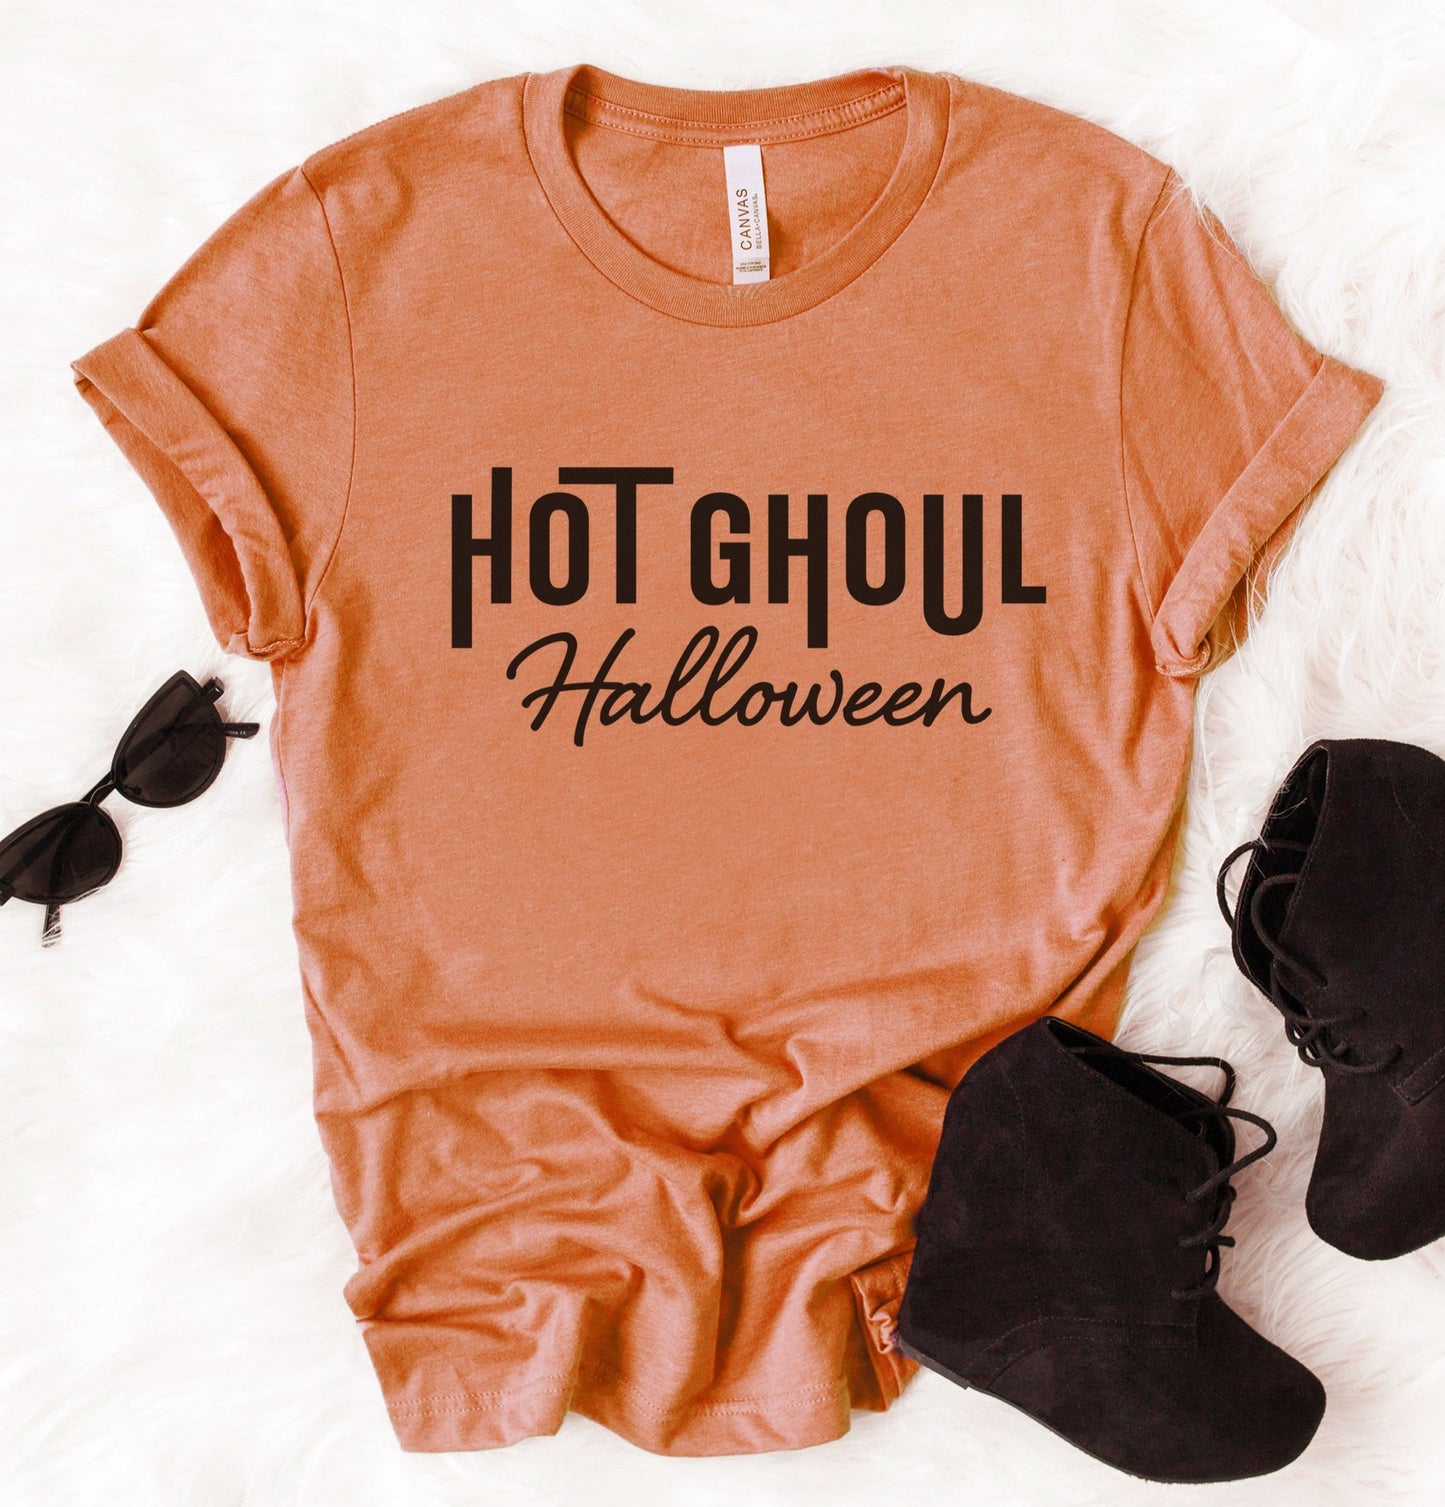 Hot Ghoul Halloween Tee